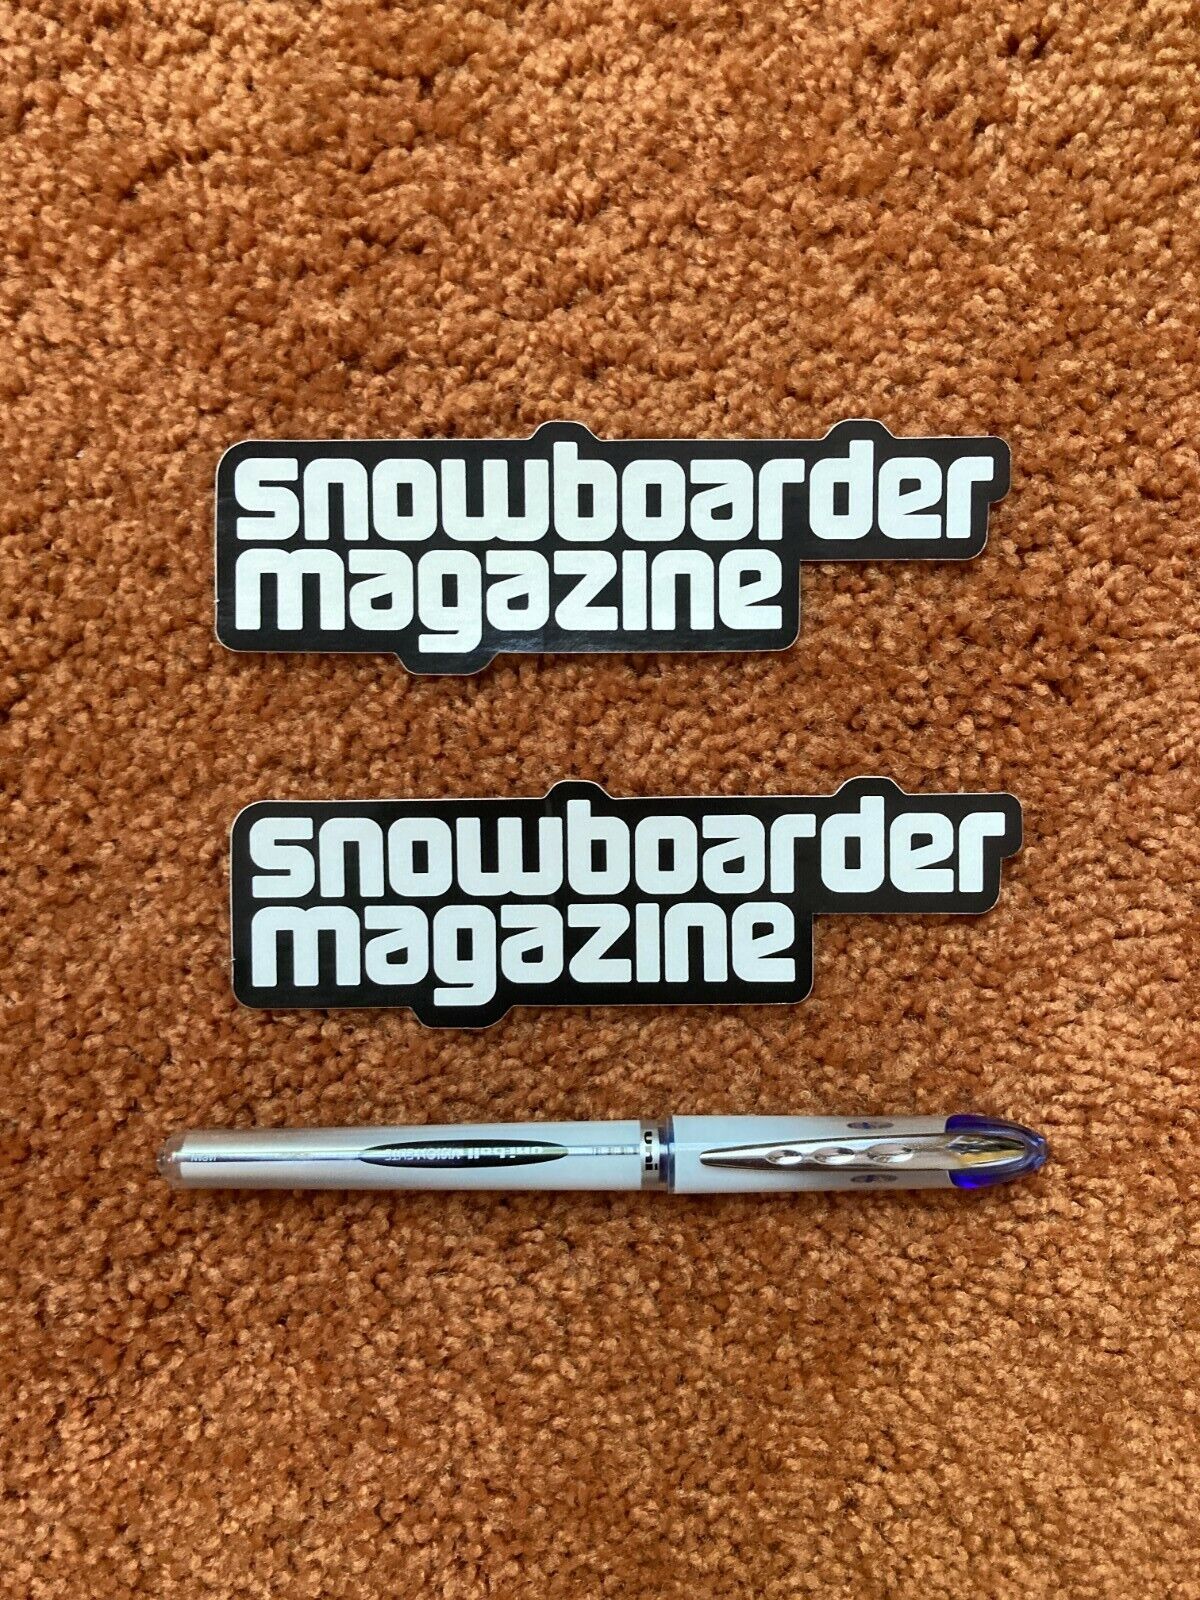 Lot of 2 Snowboarder Magazine Small Black Sticker Decal